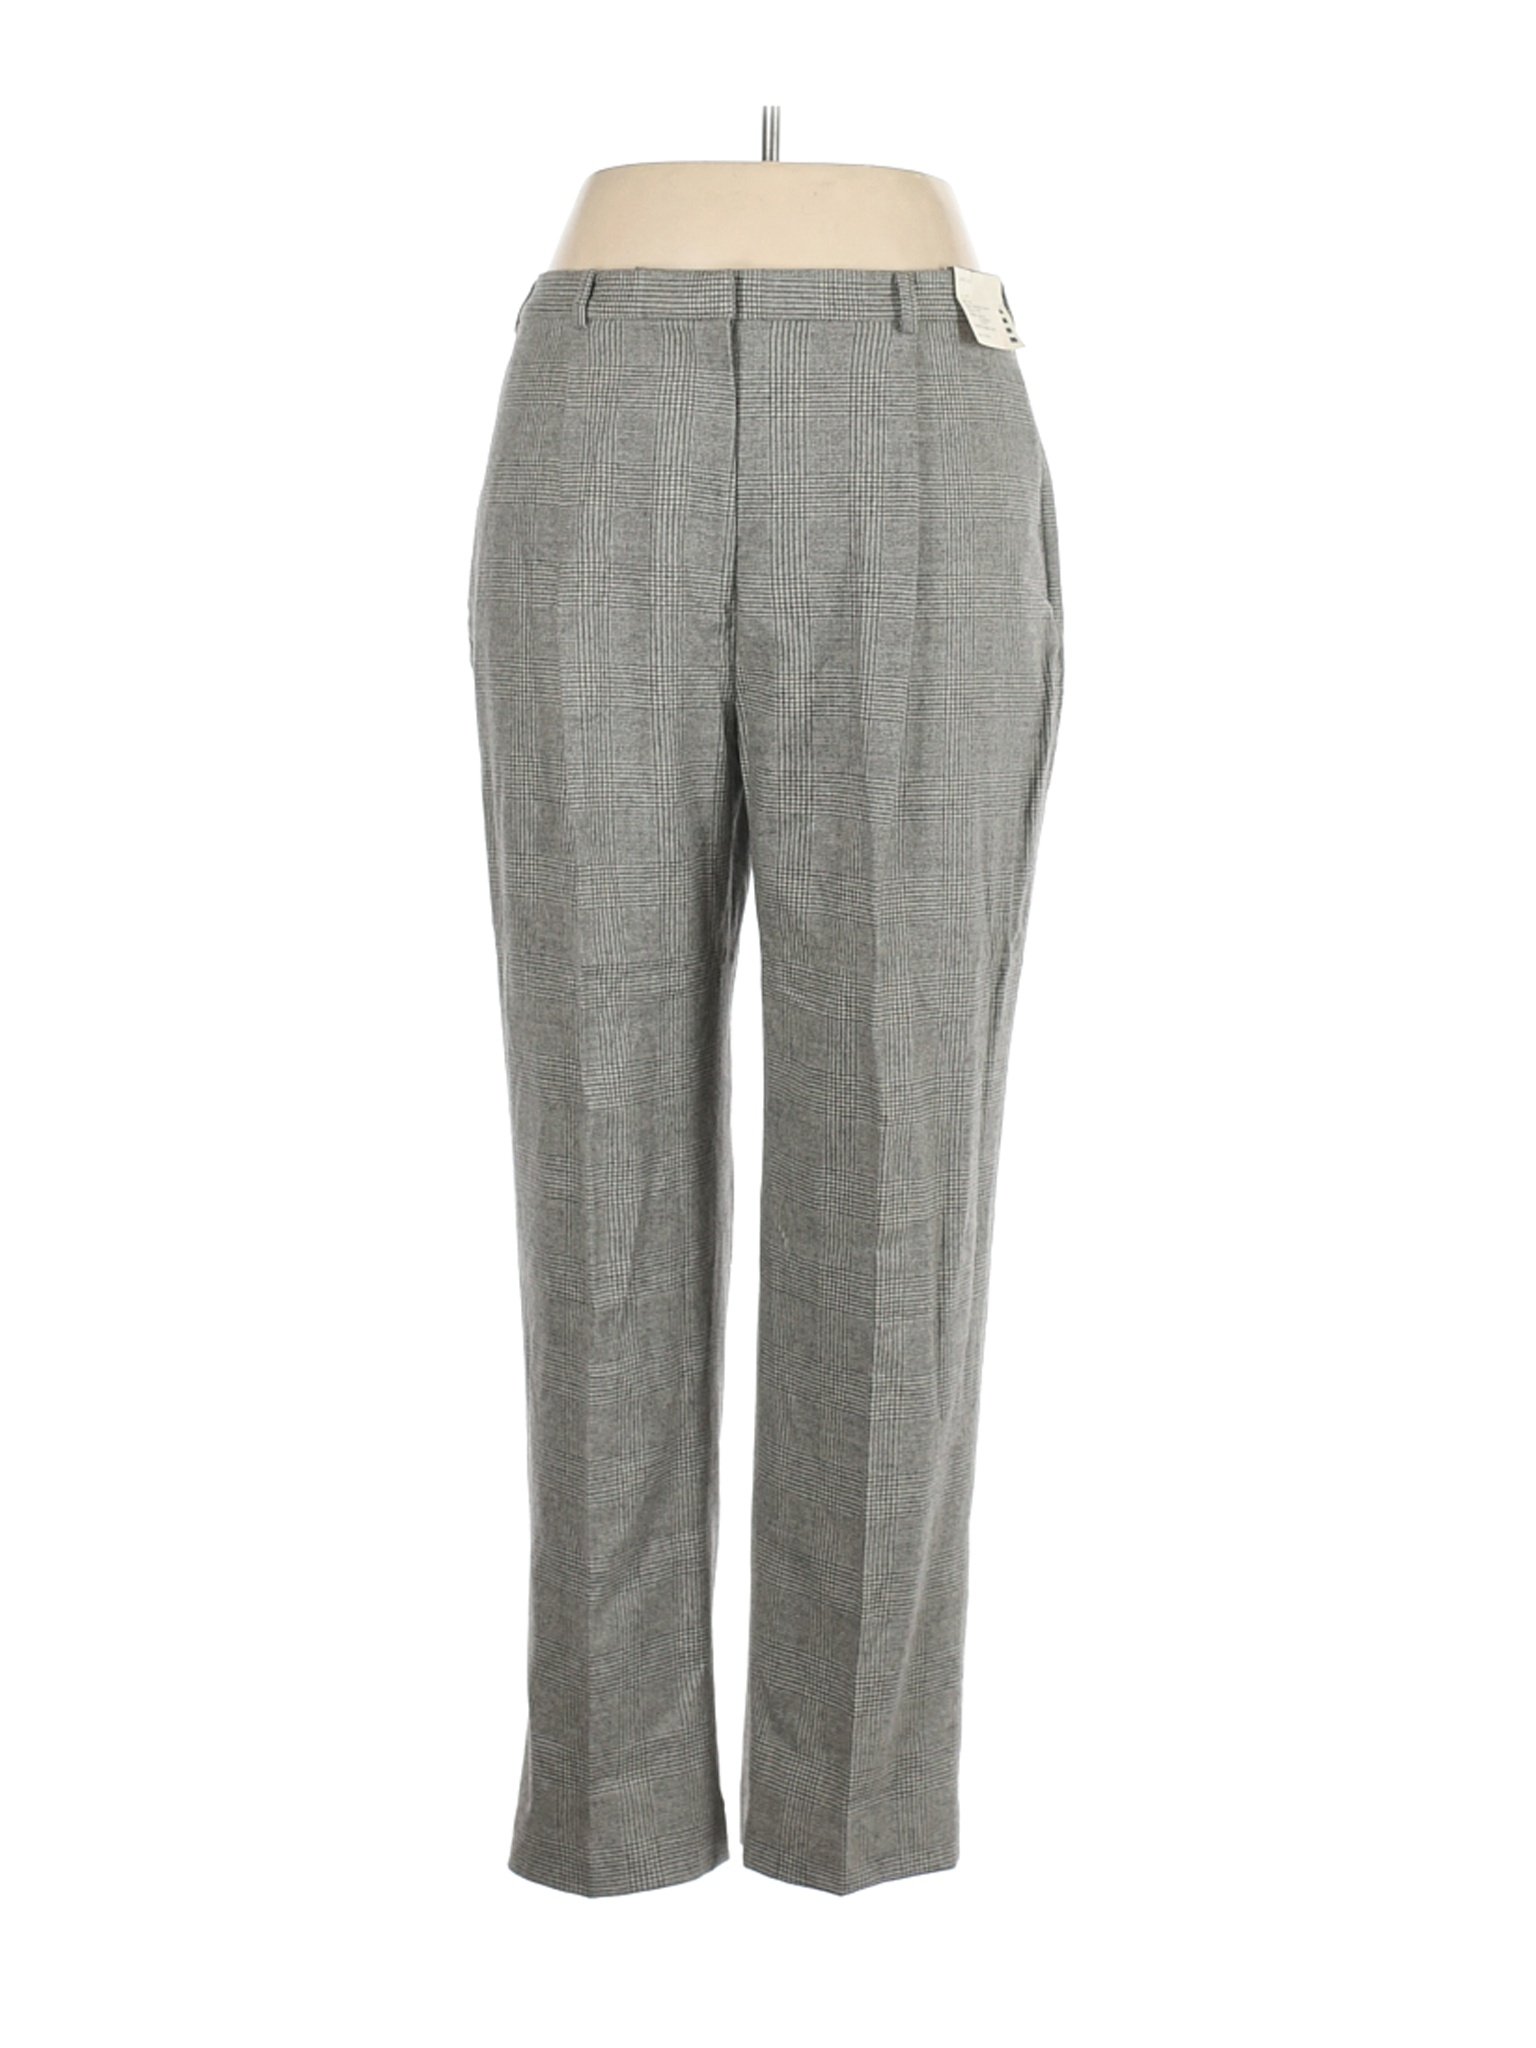 NWT Lands' End Women Gray Wool Pants 16 | eBay